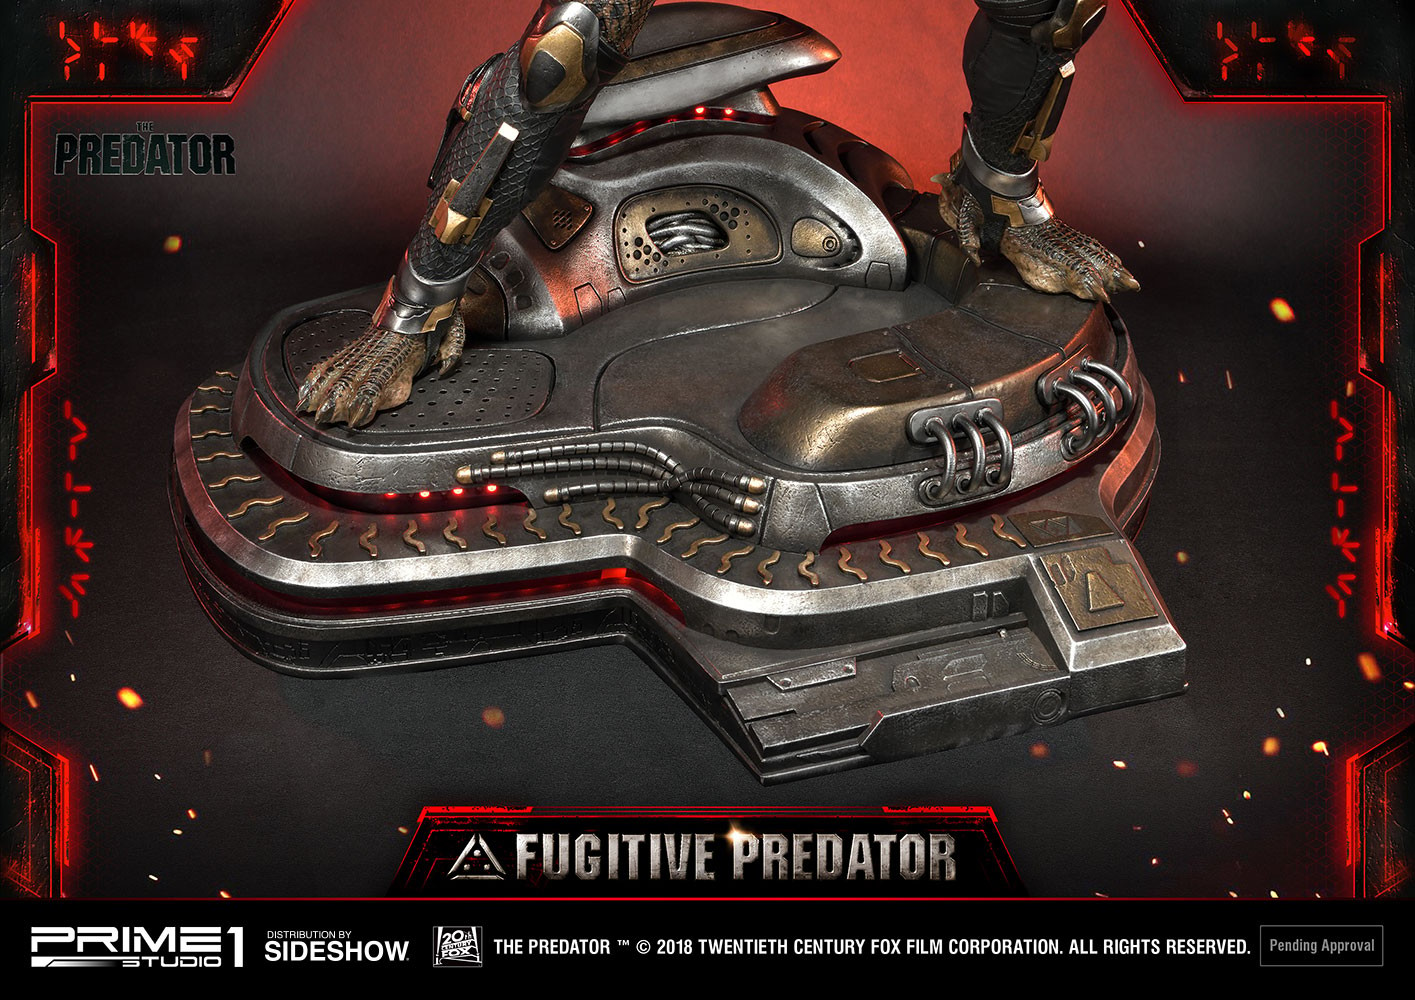 Fugitive Predator Collector Edition (Prototype Shown) View 14